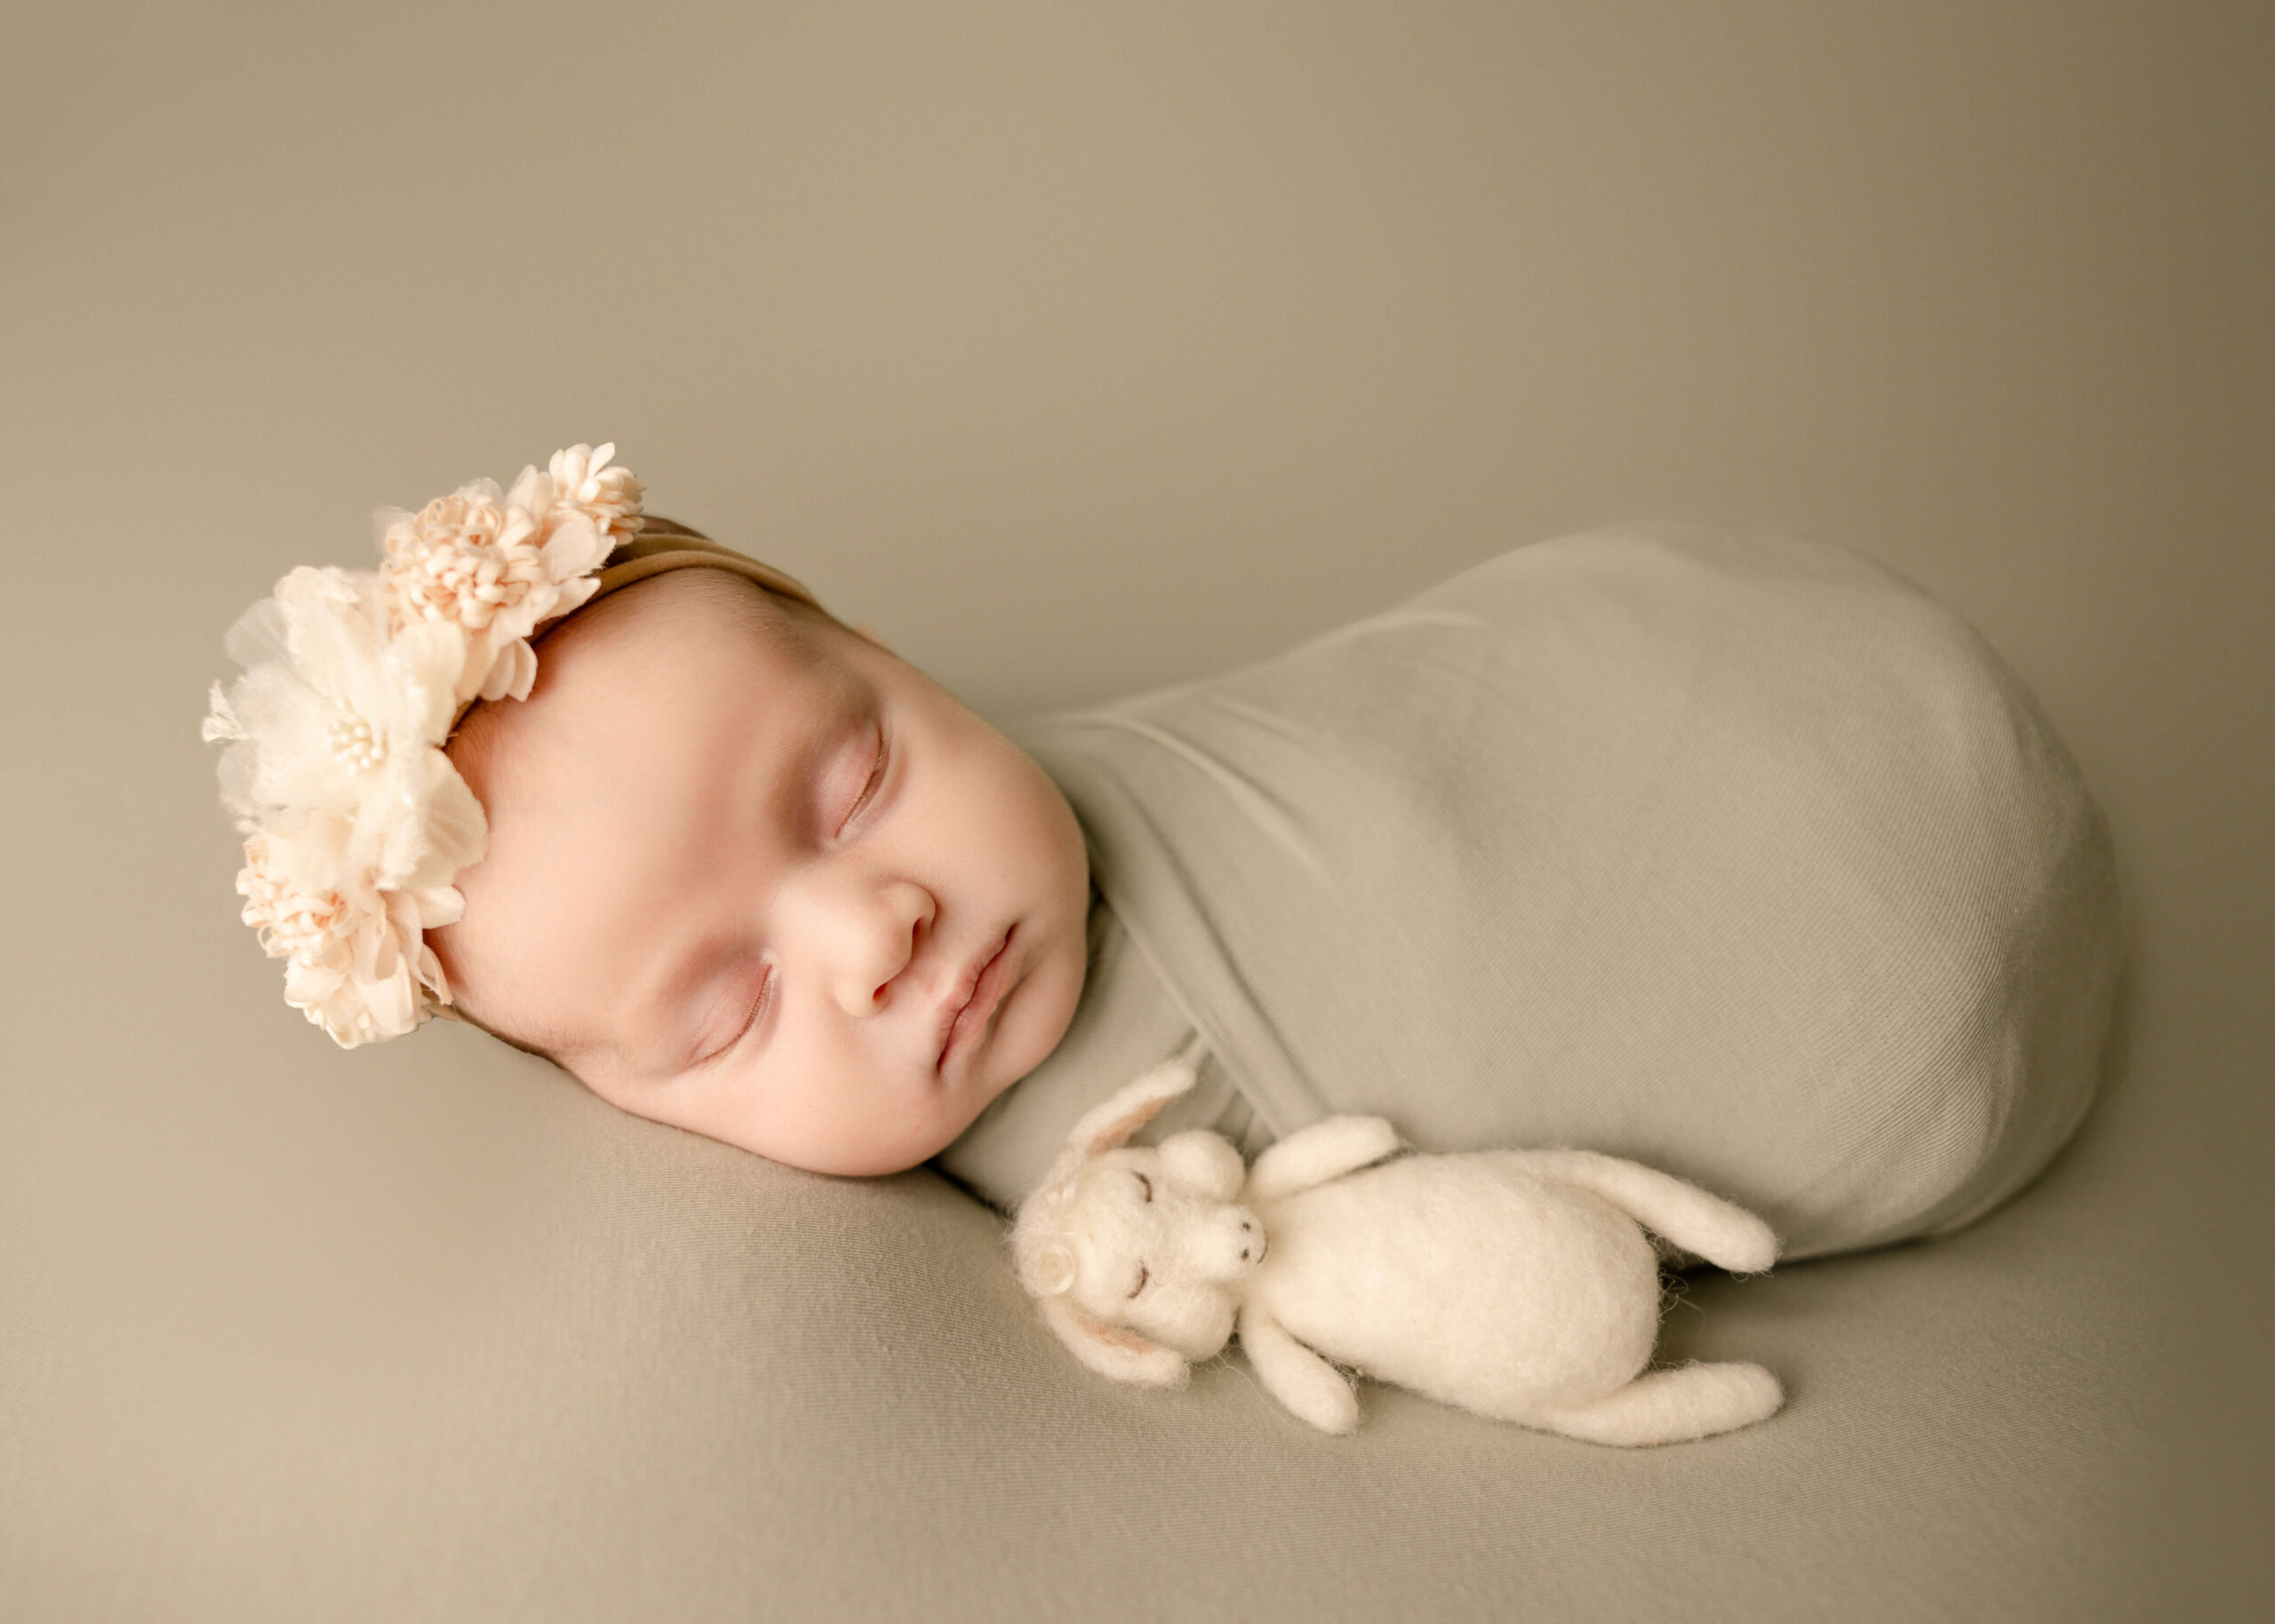 Baby sleeping on sage green blanket next to lamb stuffy in studio by Ashley Nicole.